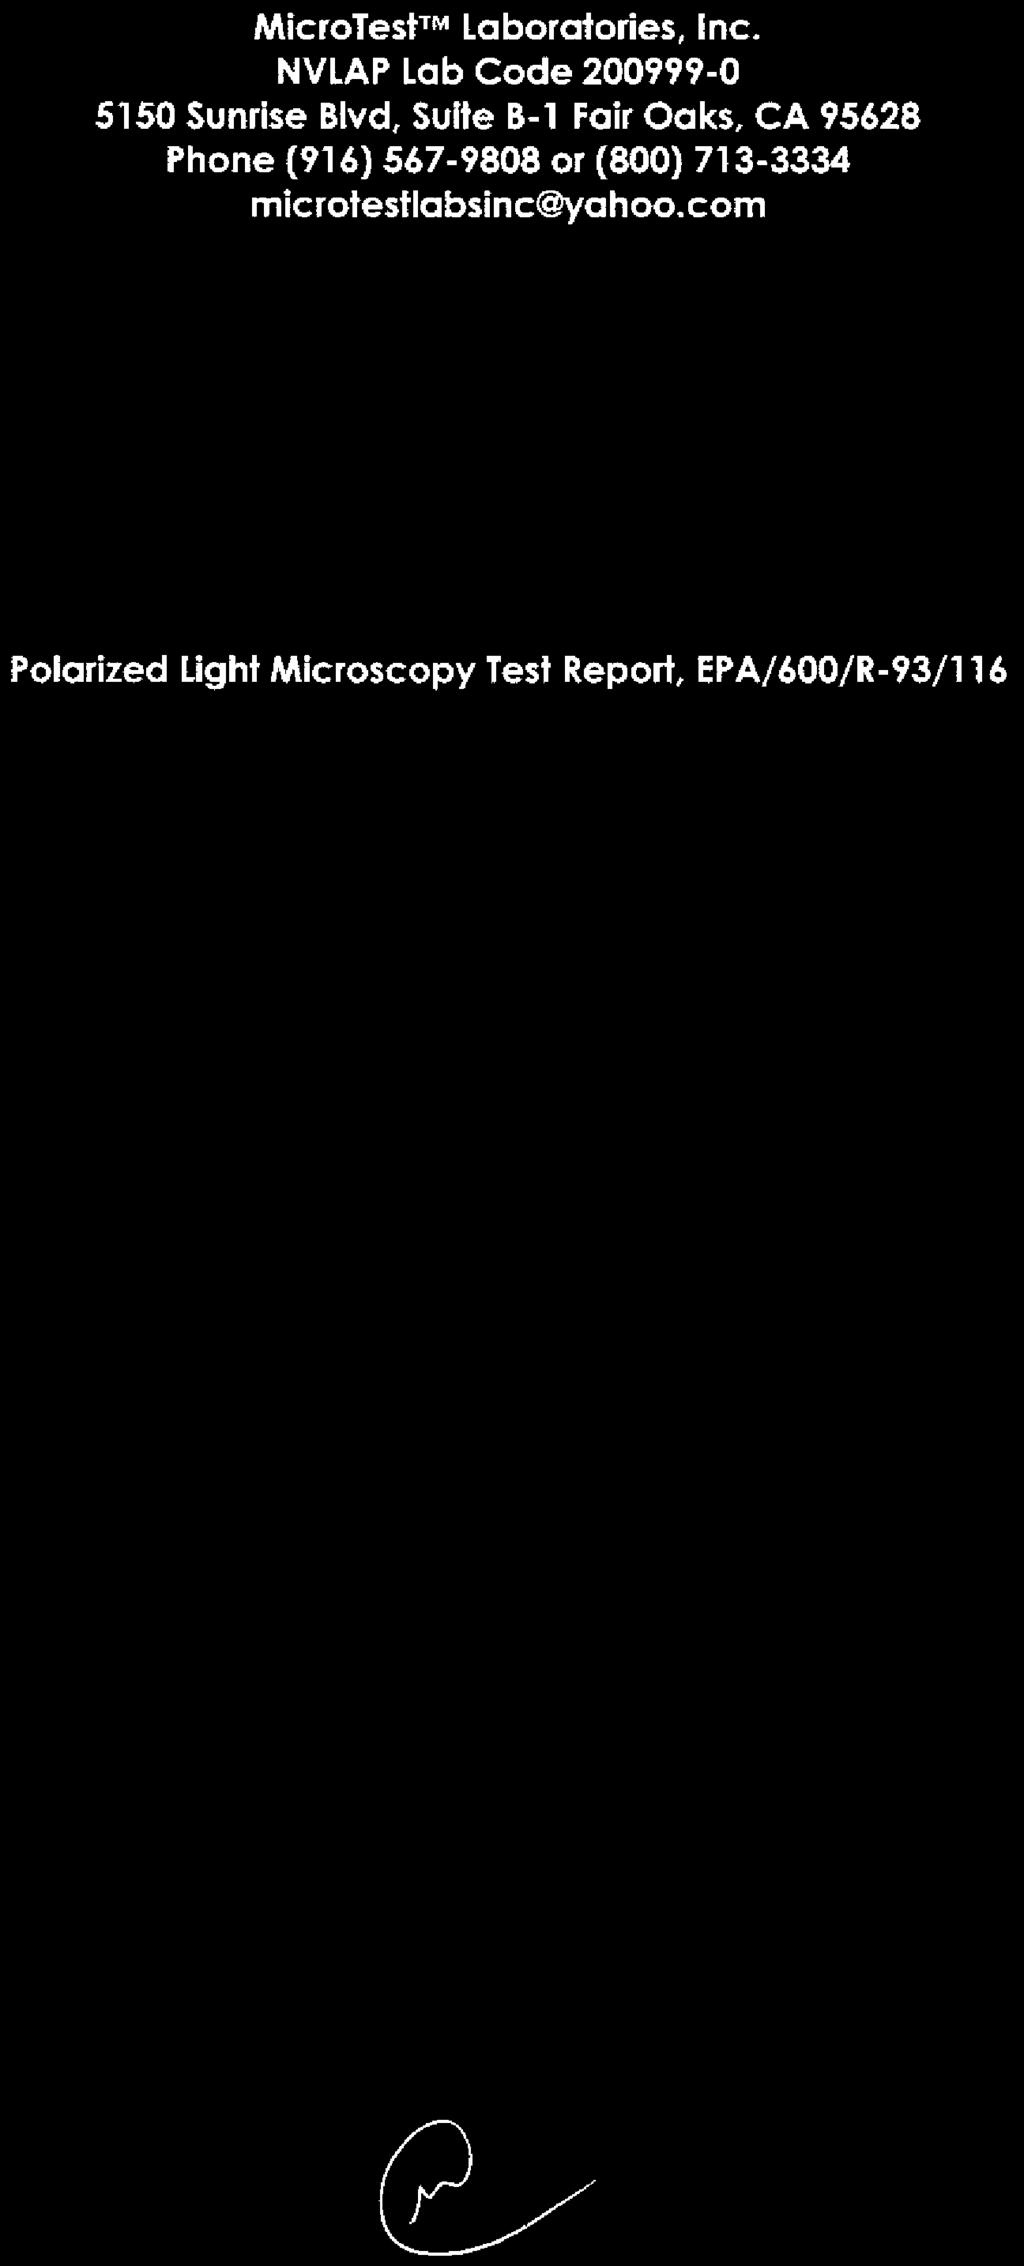 Nagra Project: Residence Sampling Date: 11/10/15 2510 Burton Street Receipt Date: 11/10/15 Samples Received: 9 Stockton, CA Report Date: 11/10/15 Samples Analyzed: 9 Polarized Light Microscopy Test